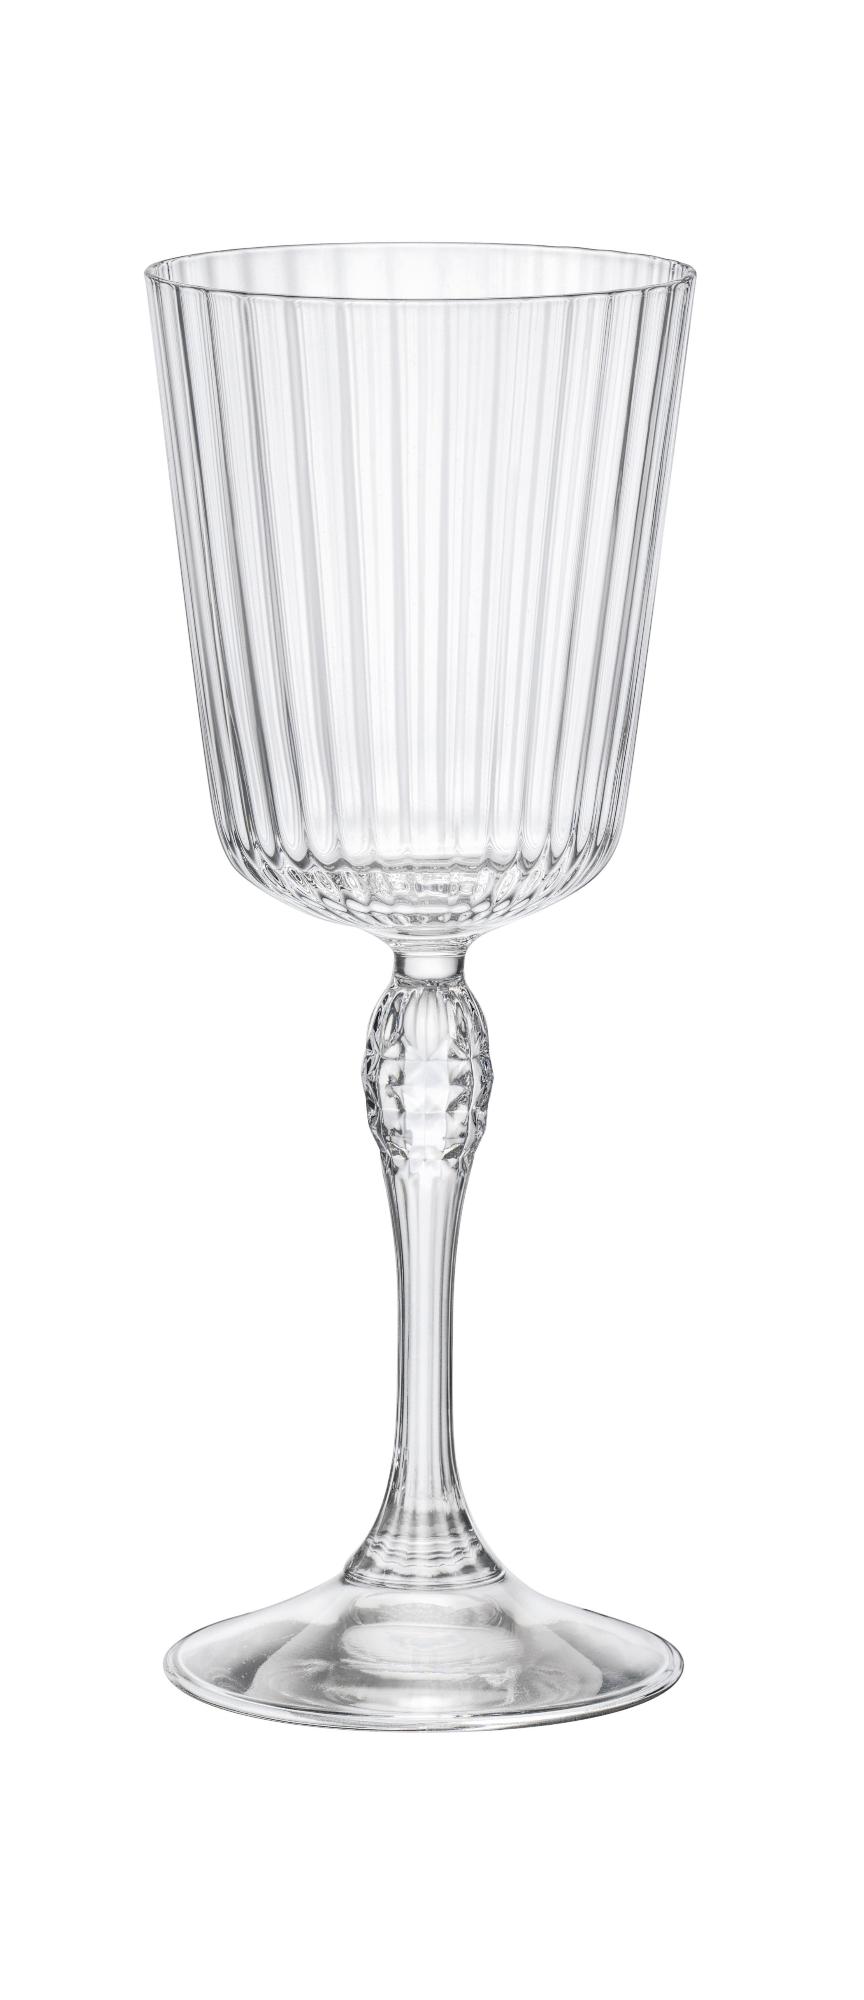 America'20s cocktail glass, 240ml